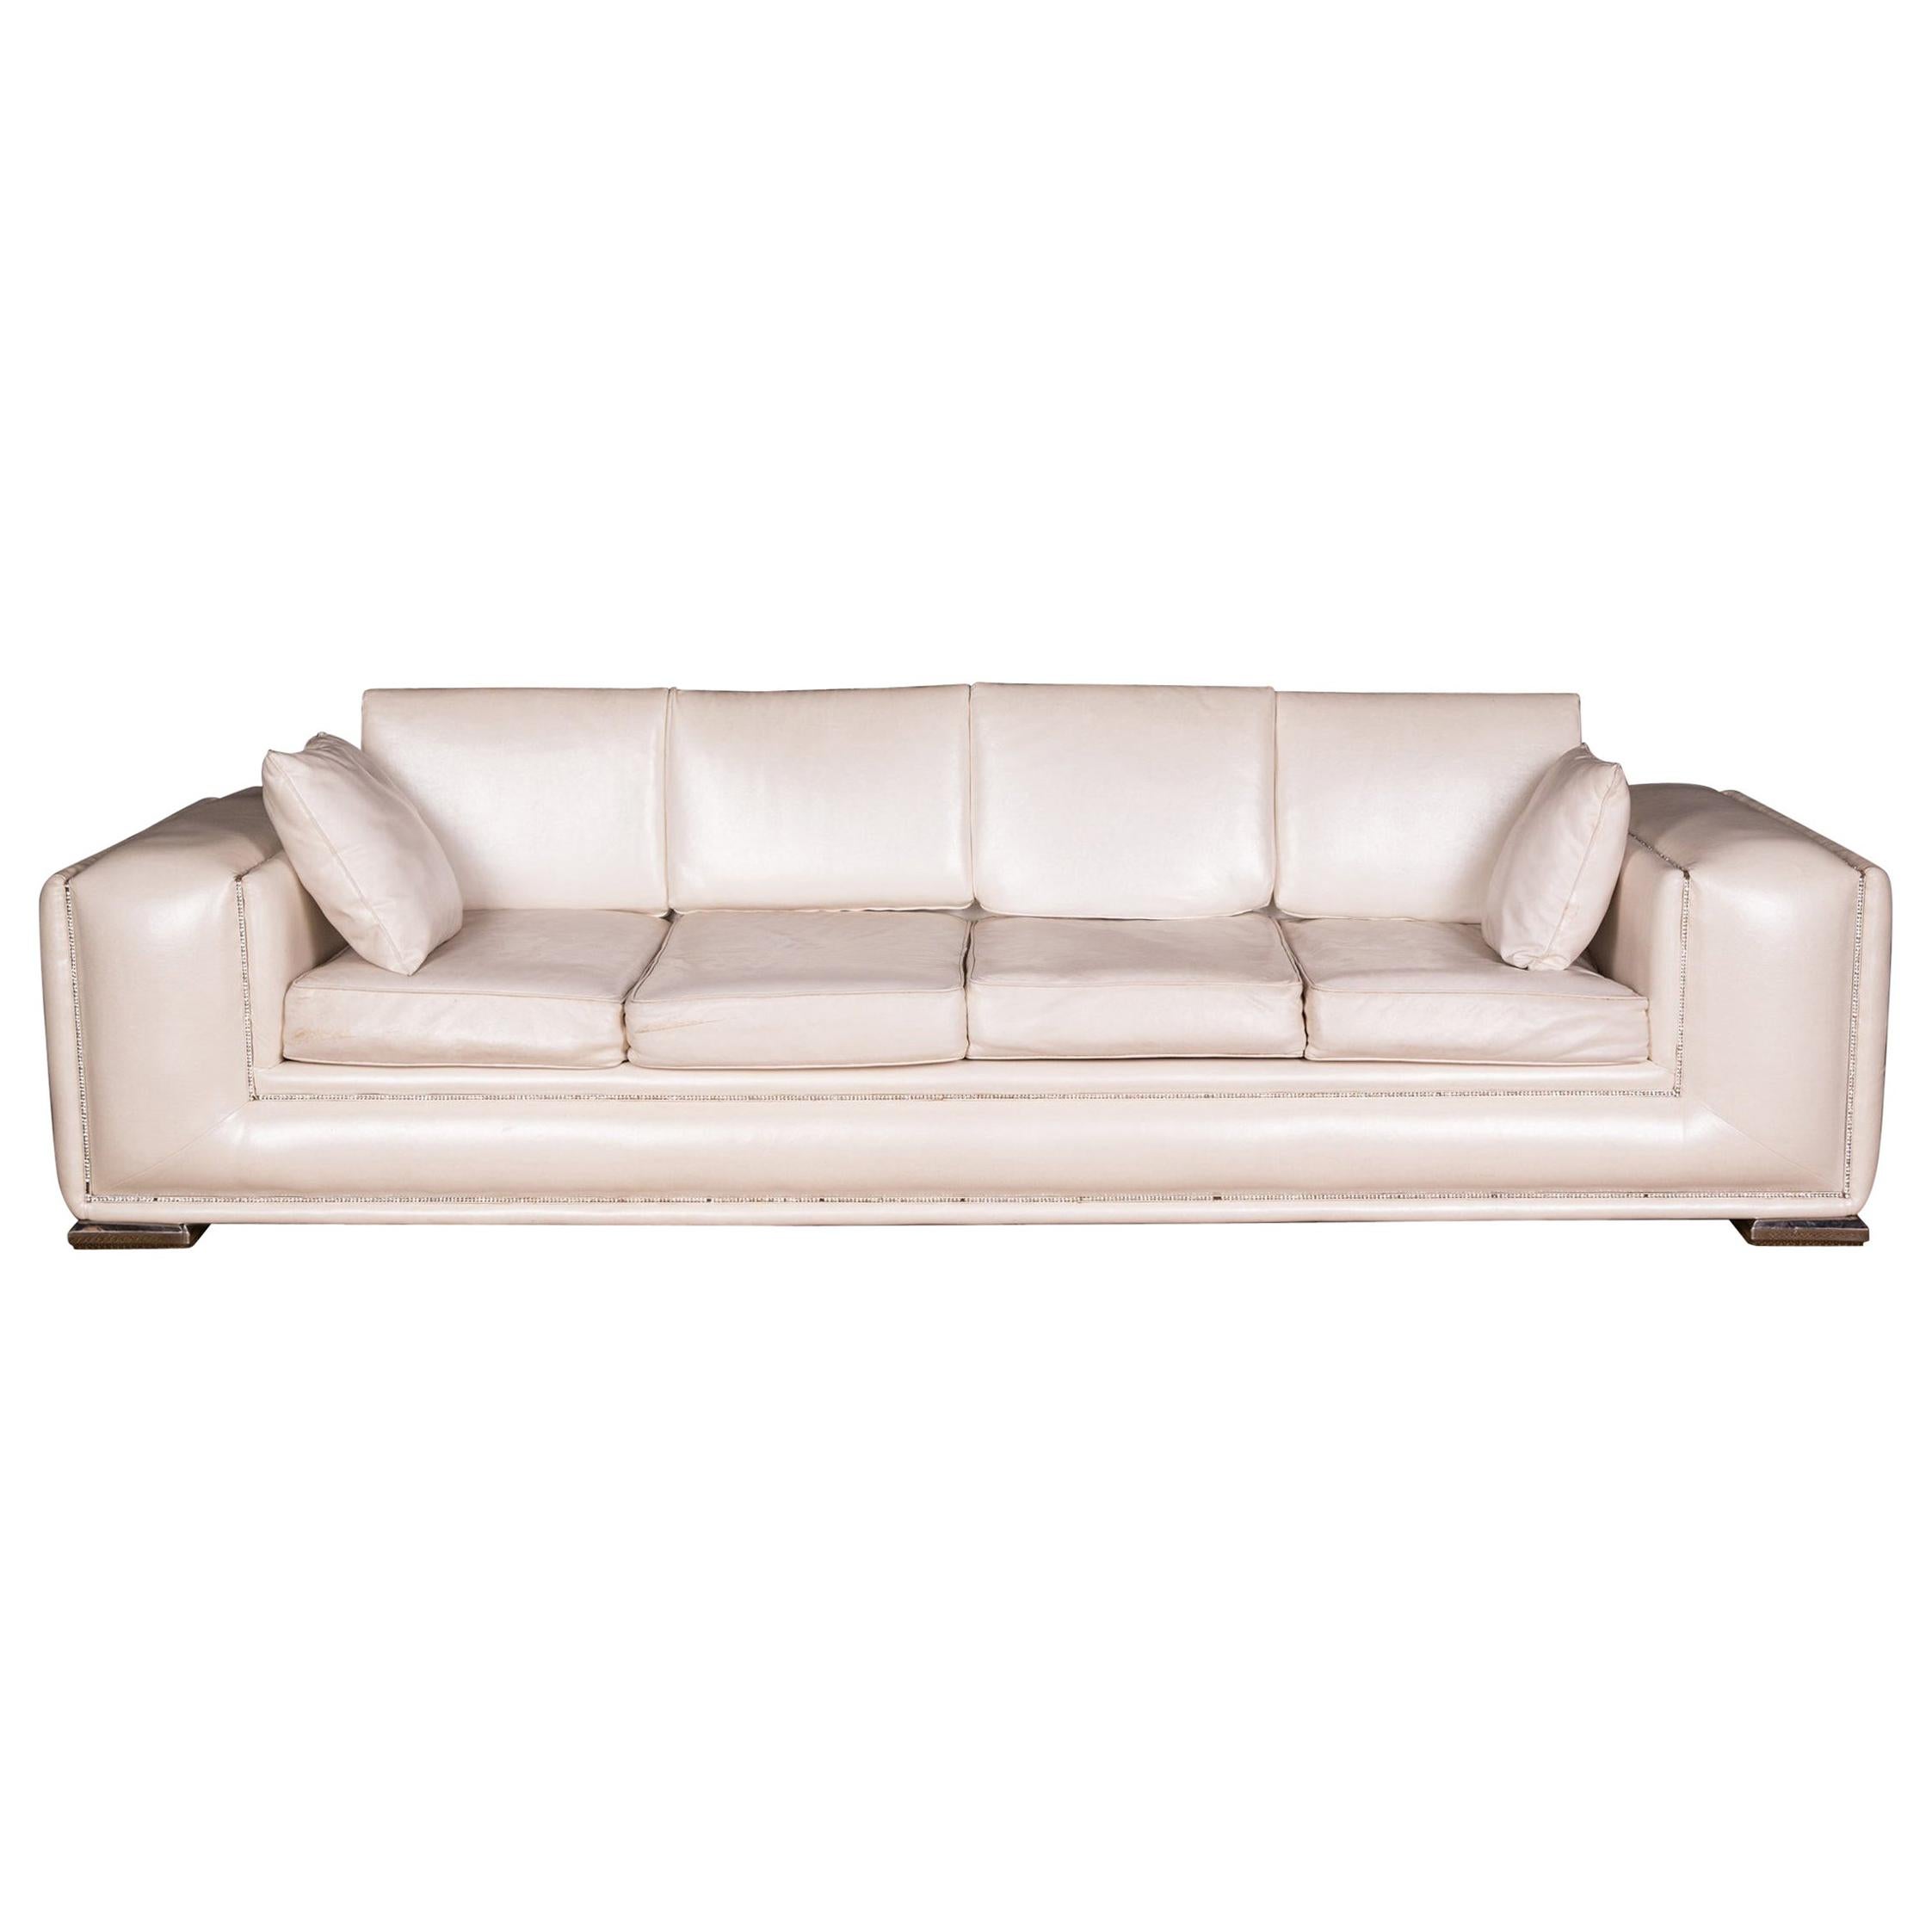 Designer Sofa Four-Seat with Swarovski Stones Rhinestones For Sale